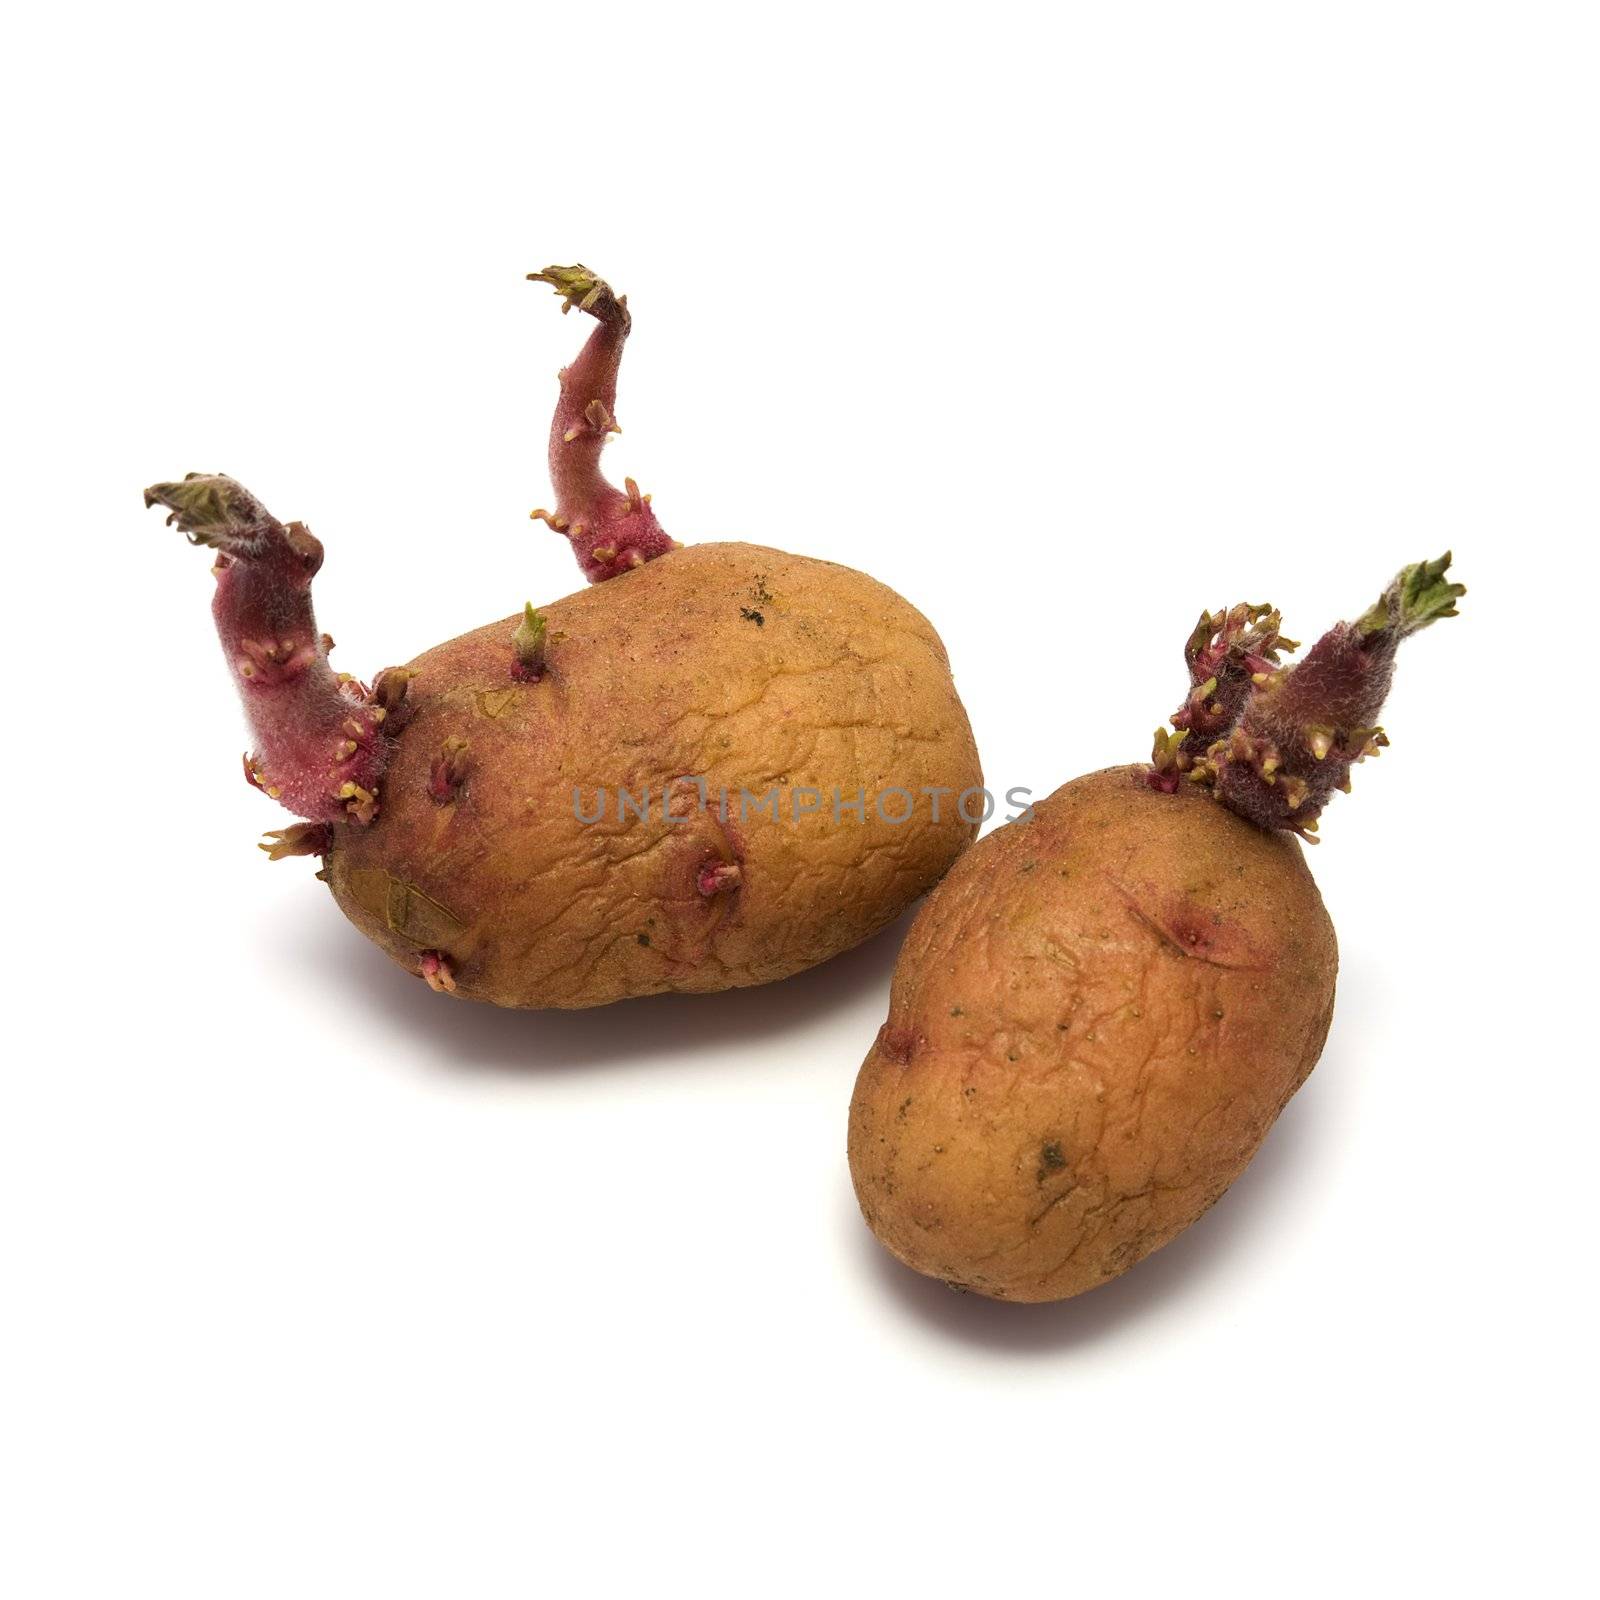 Seed potato by pzaxe